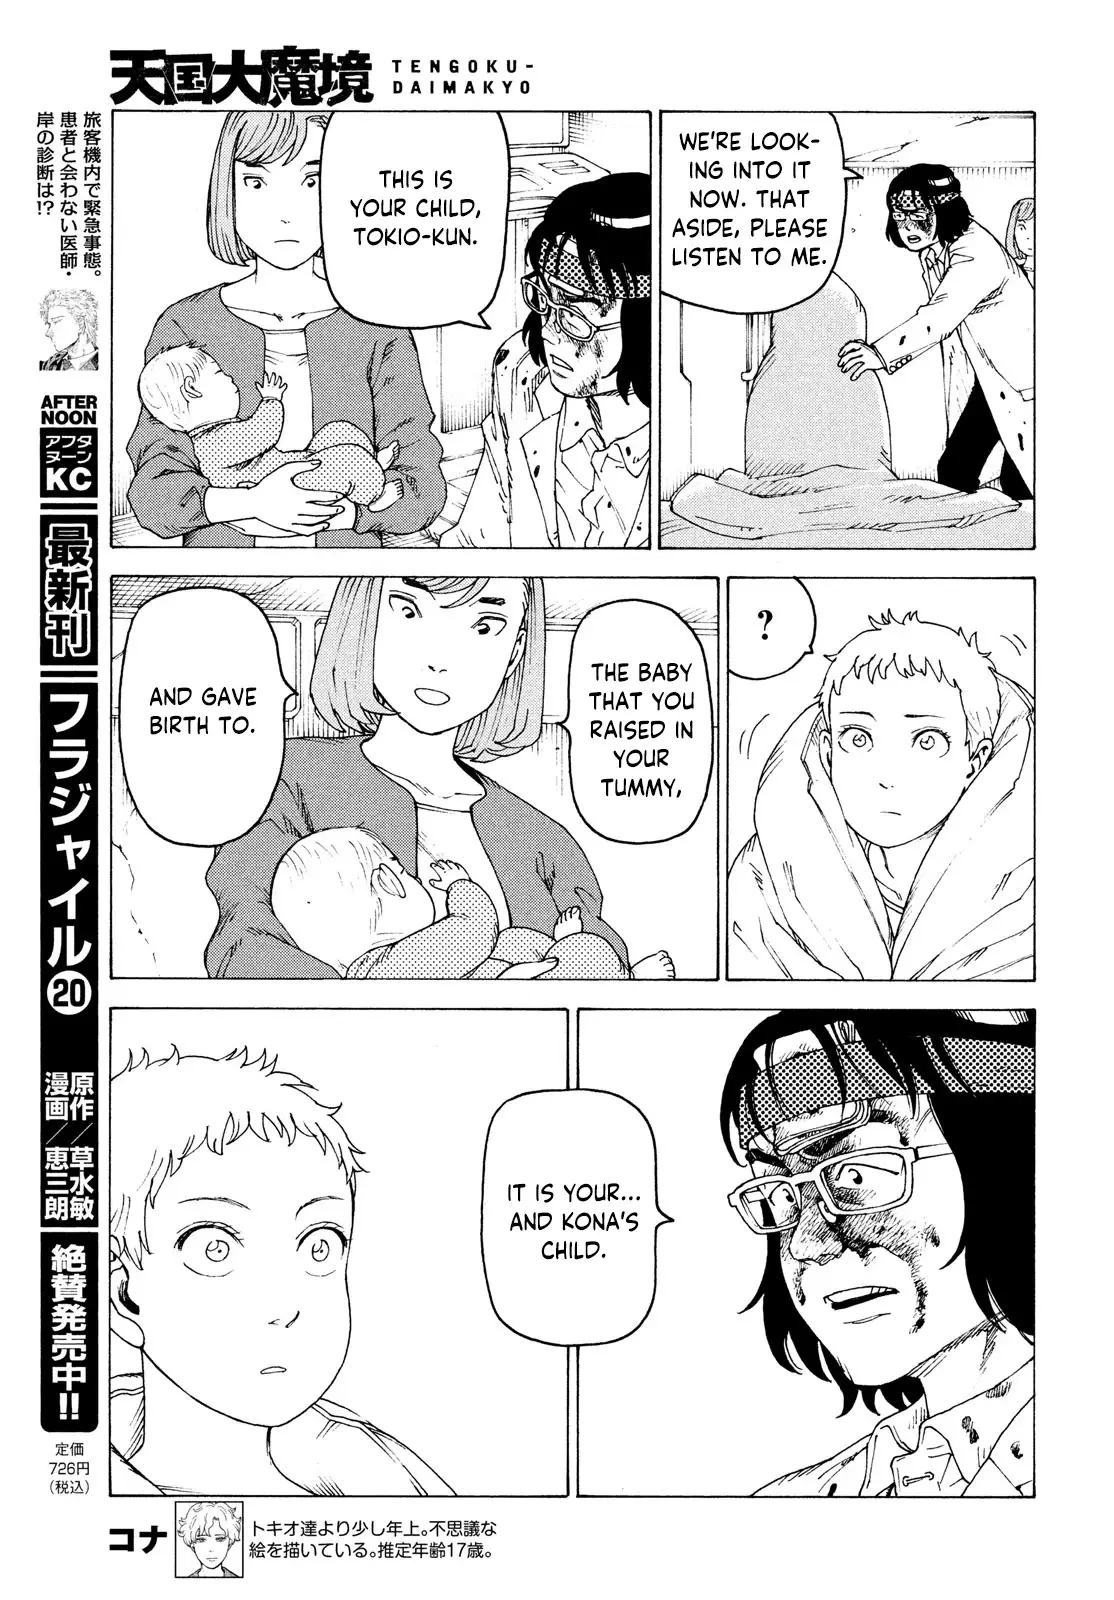 Tengoku Daimakyou - 37 page 27